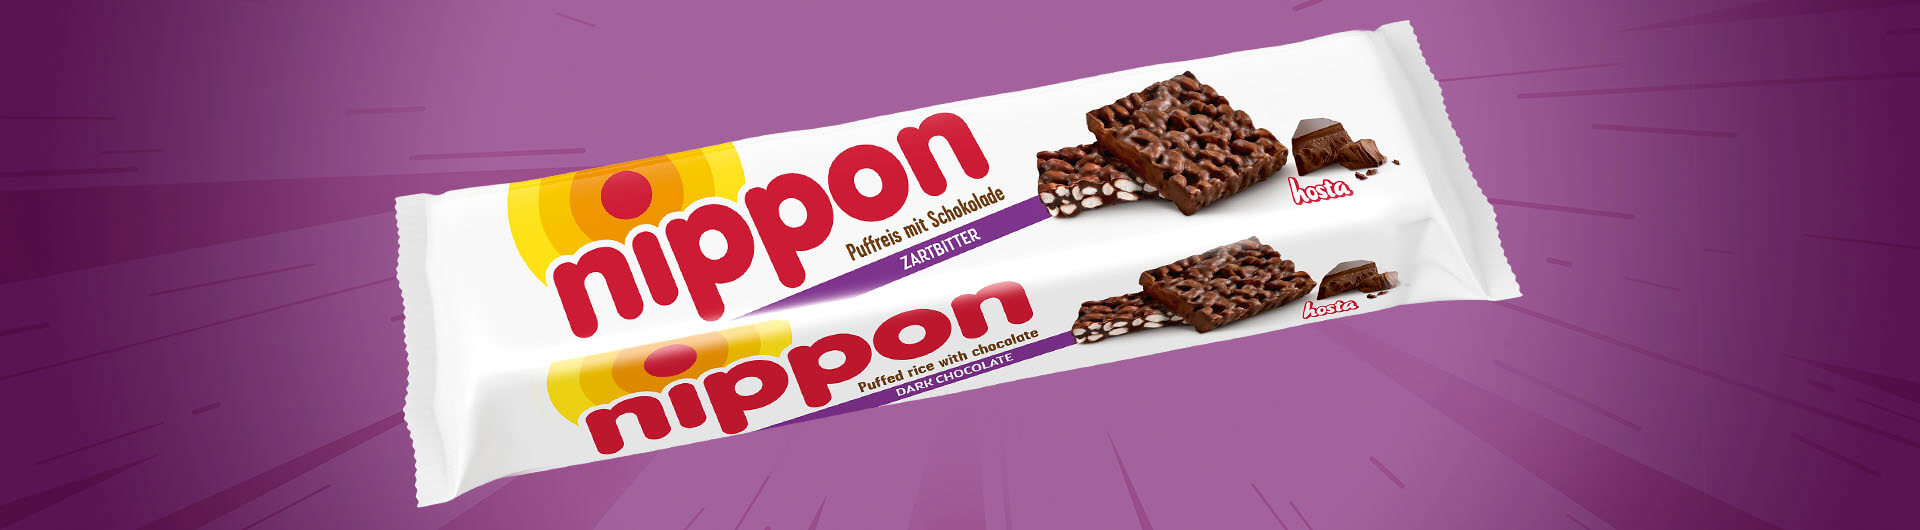 nippon with dark chocolate